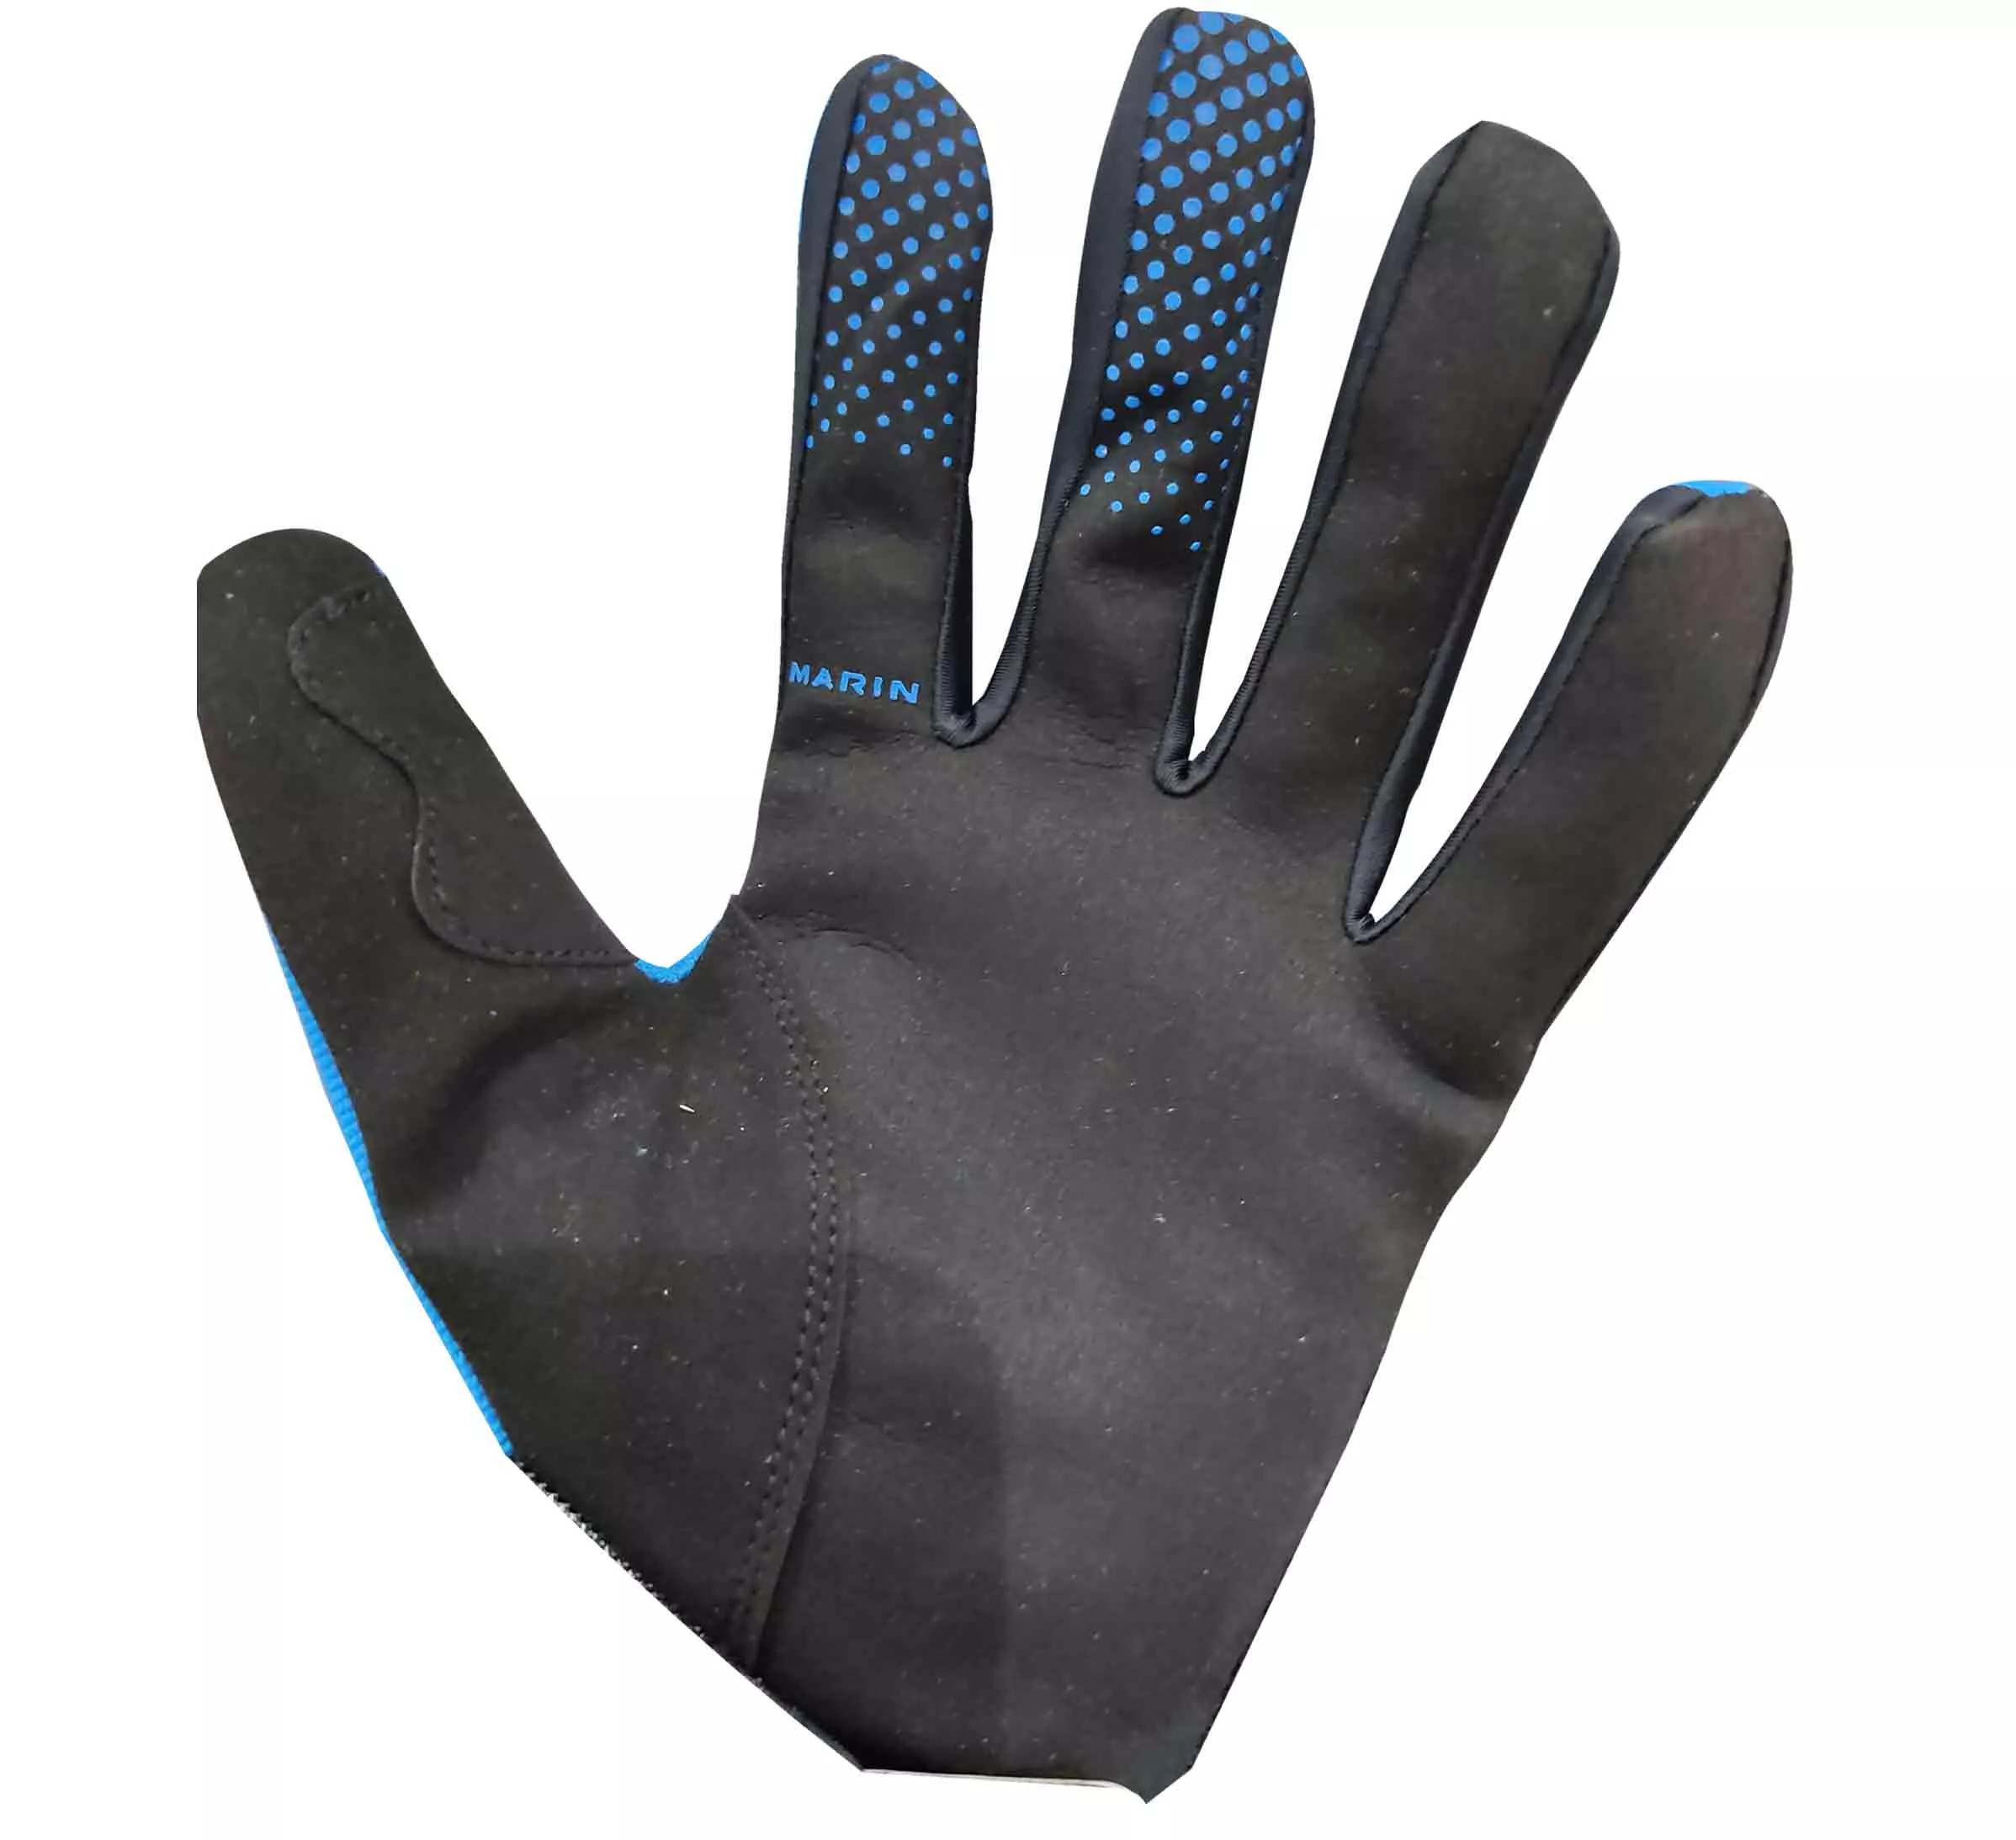 Marin guantes AI-05-8762 largo azul